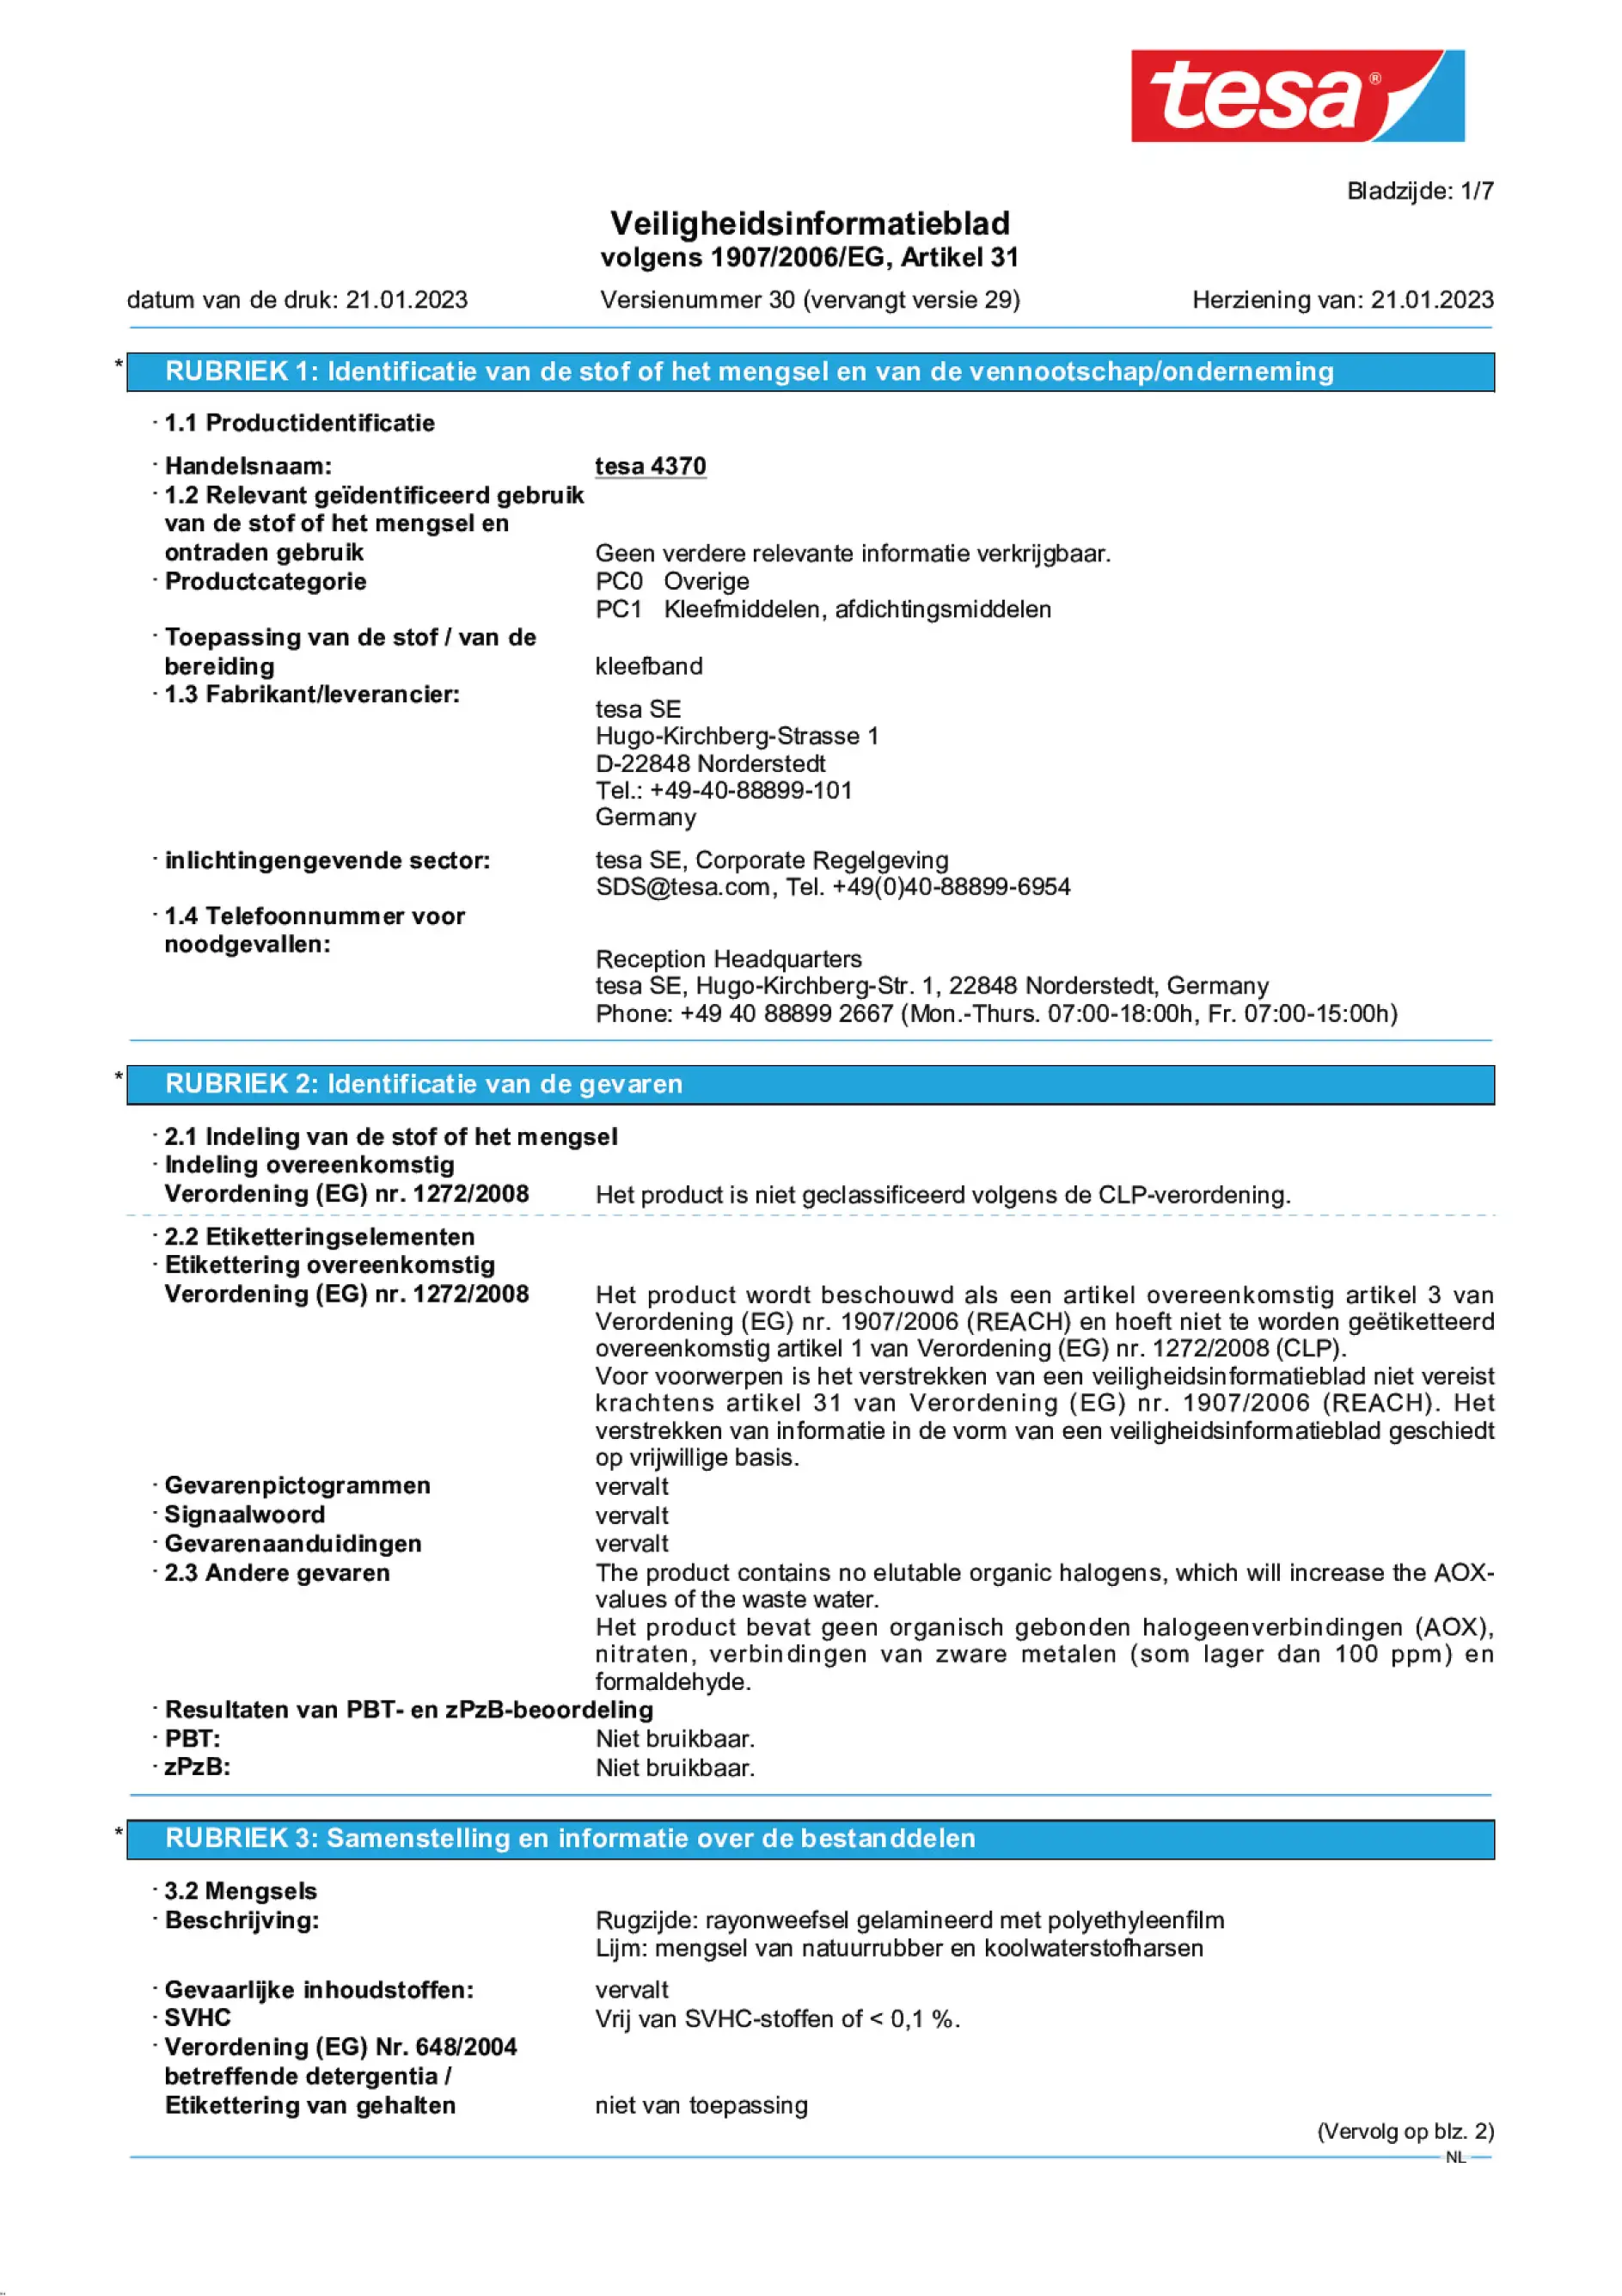 Safety data sheet_tesa® 04370_nl-NL_v30